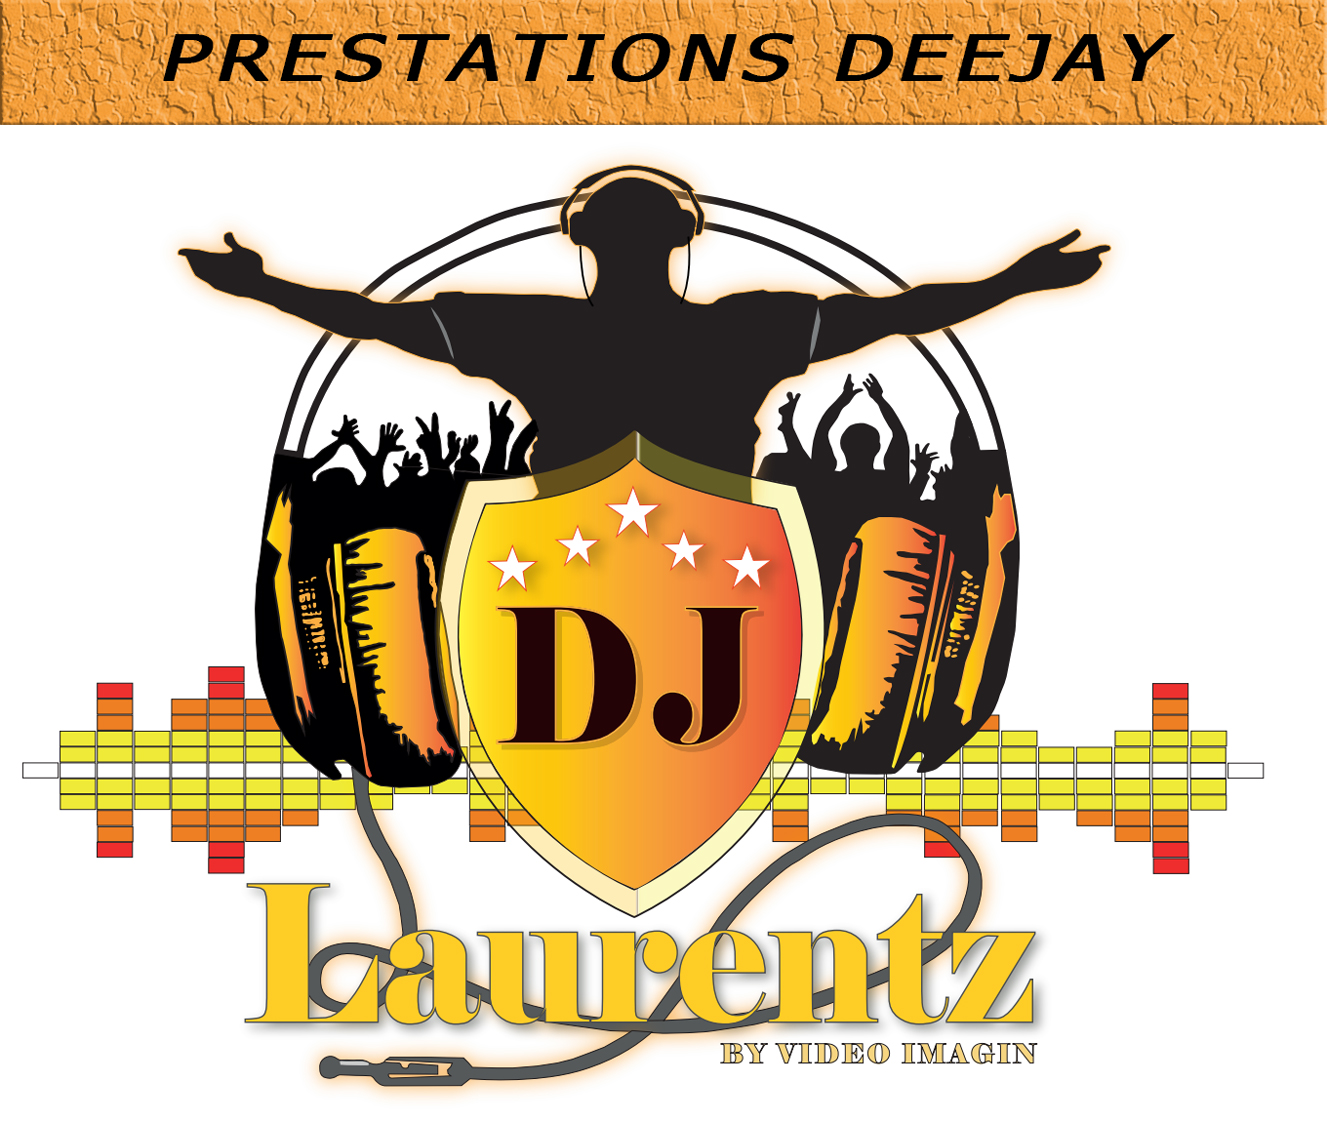 PRESTATION DJ LAURENTZ